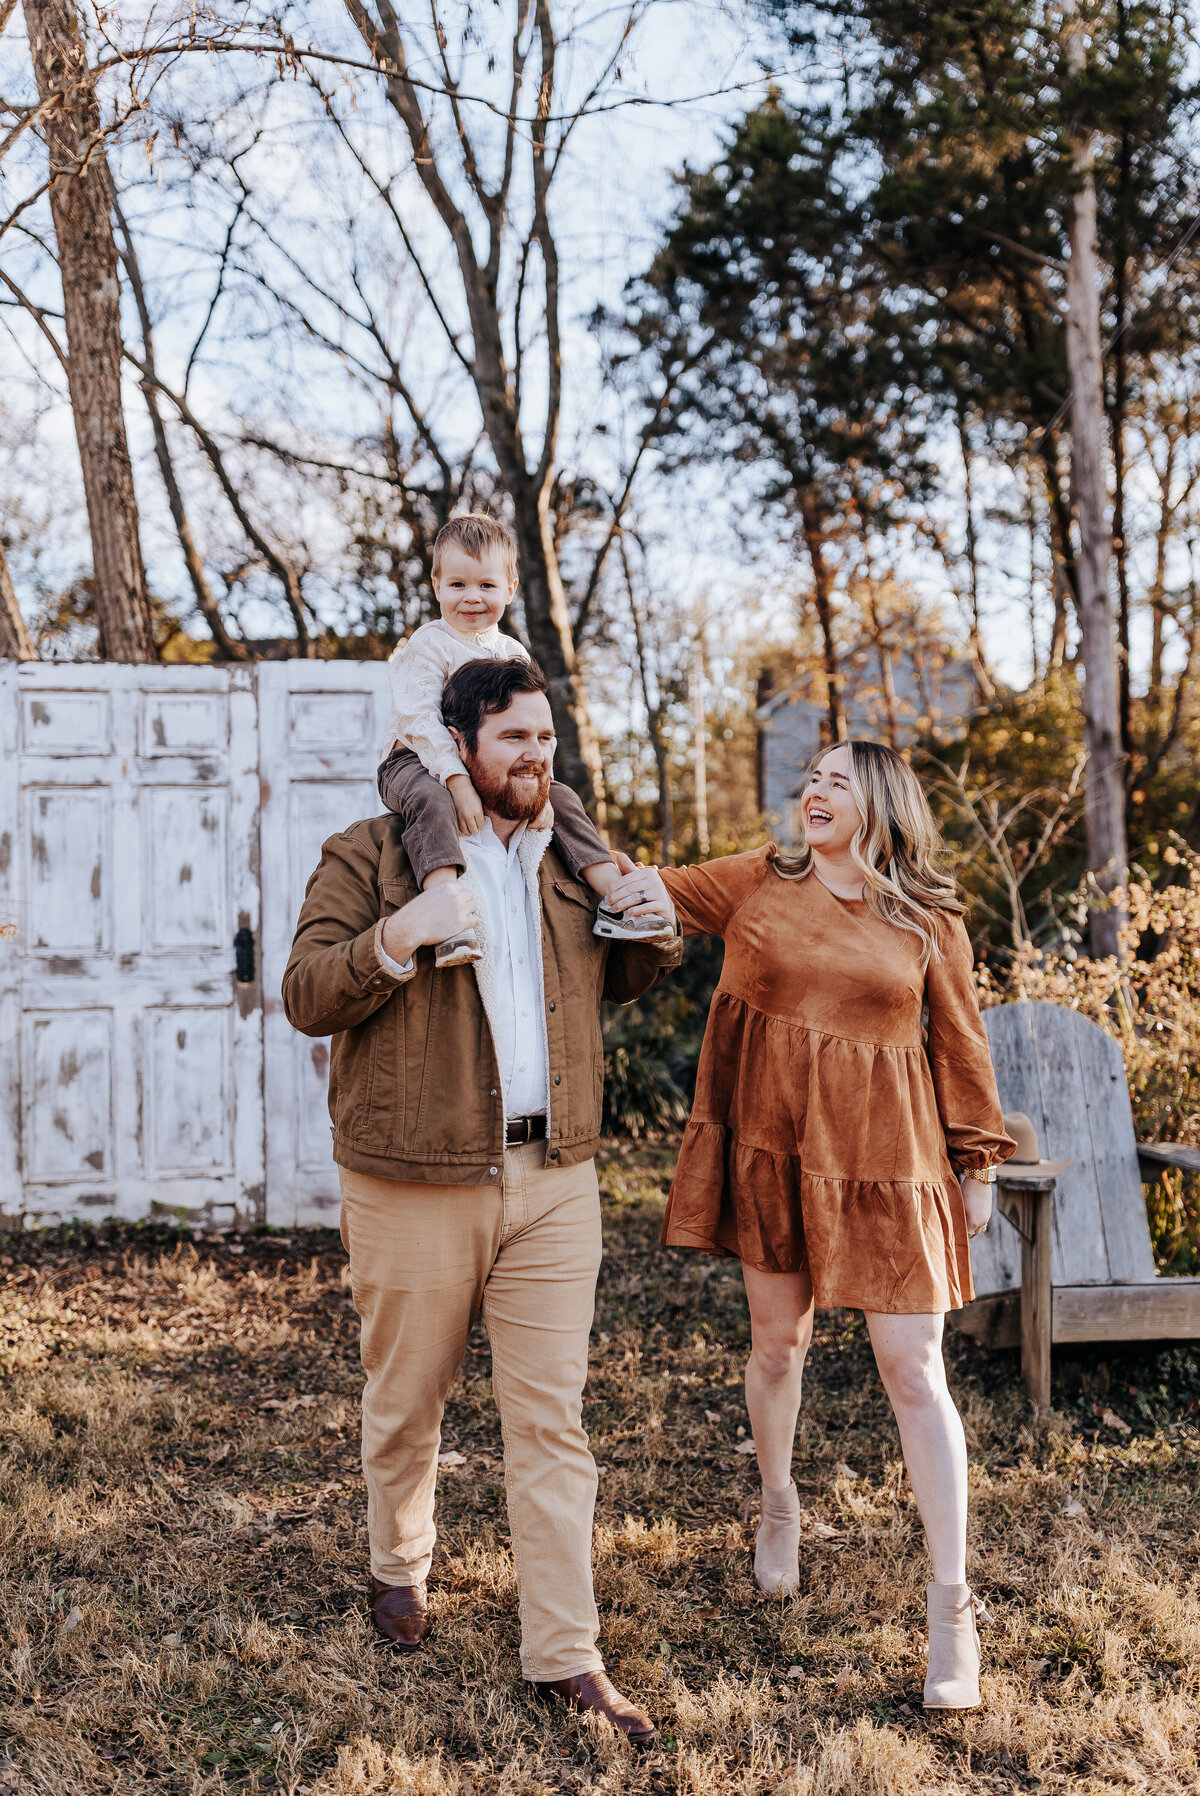 Nashville family photographers capture fall family outdoor photos